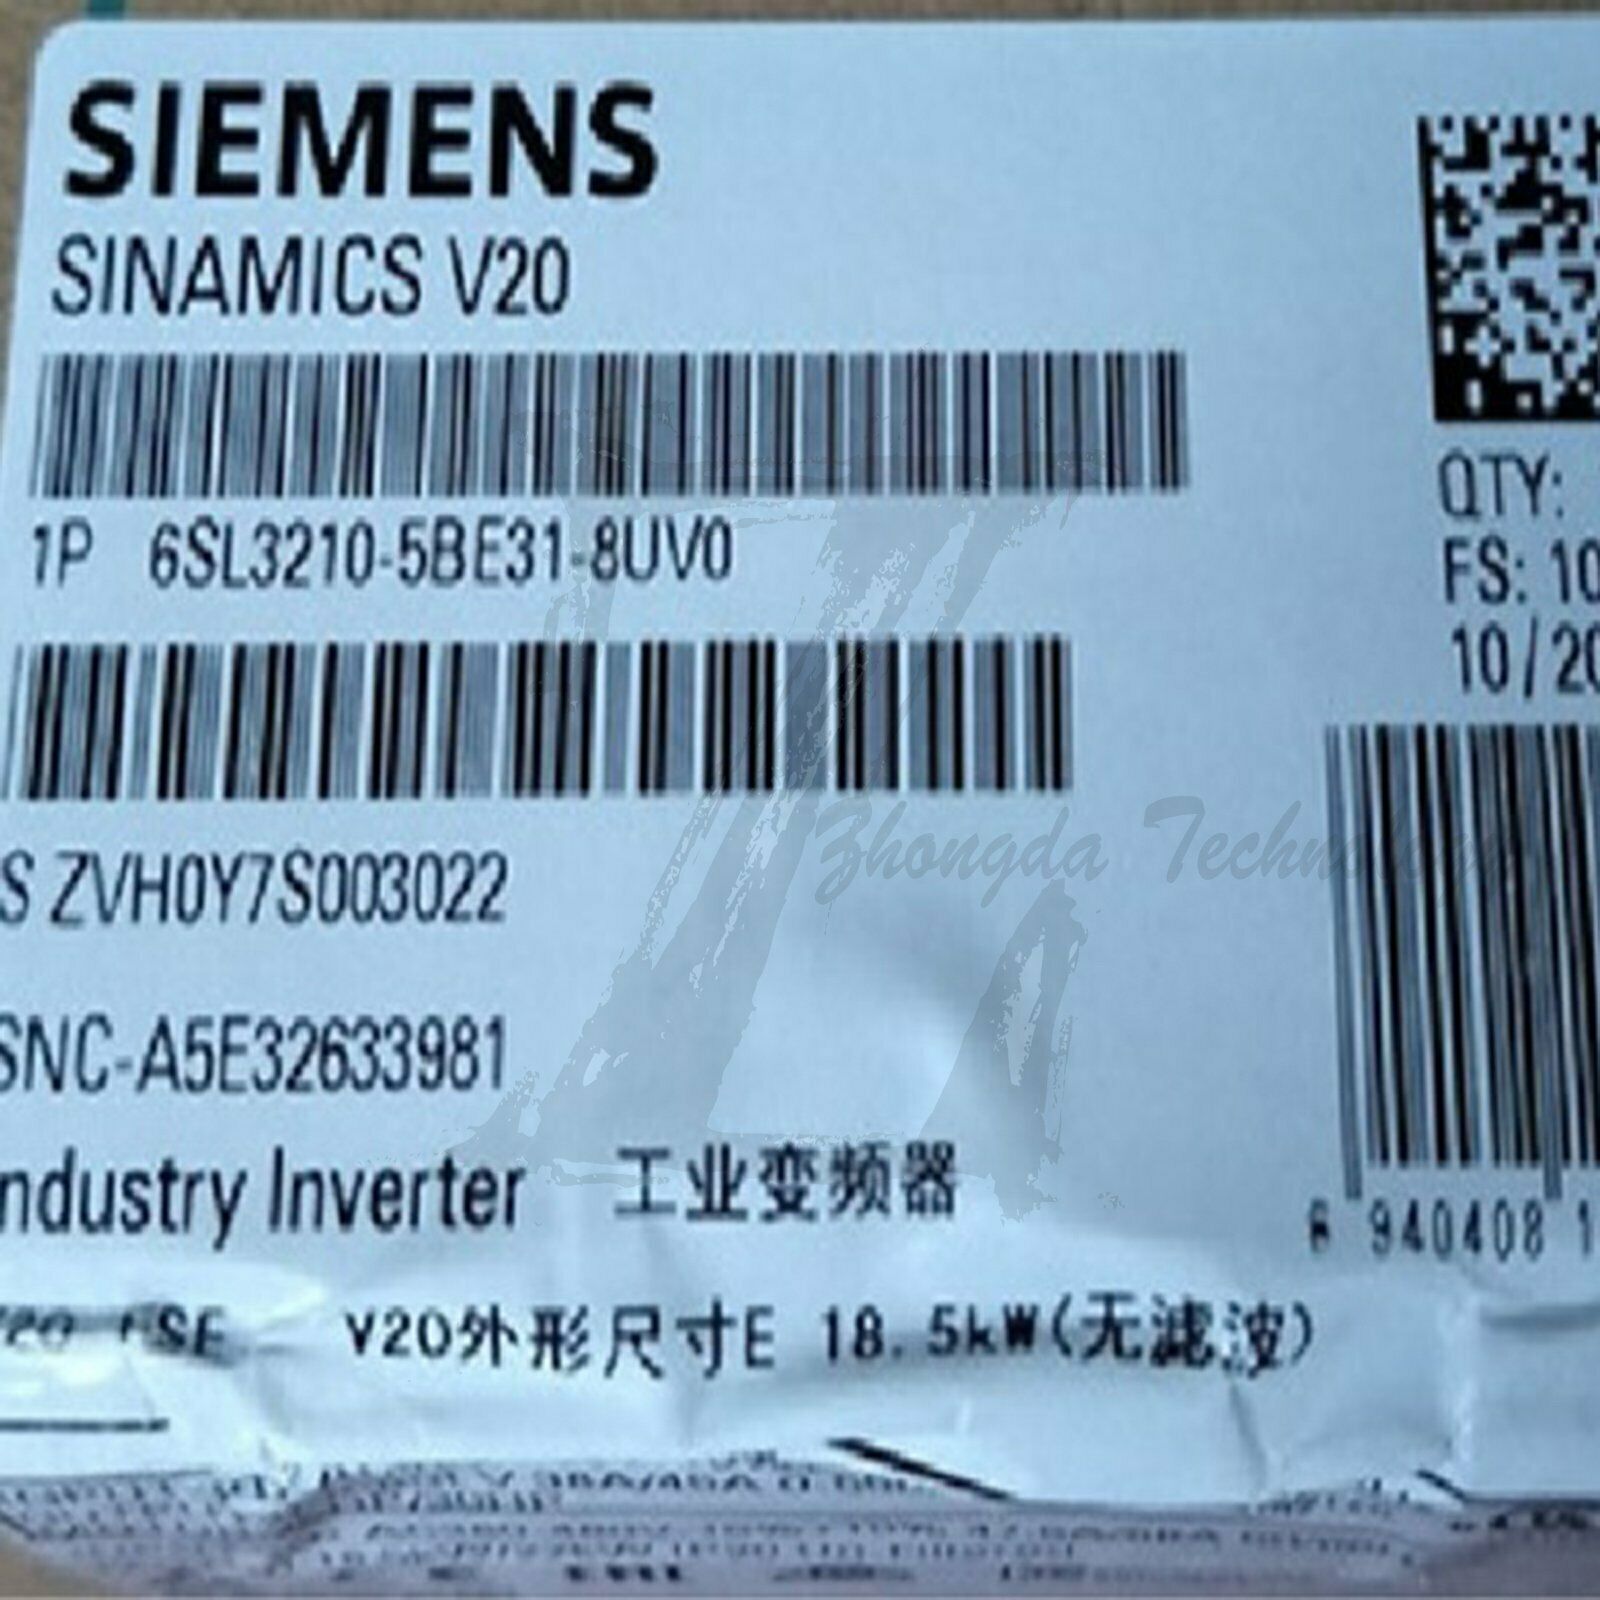 New Siemens inverter 6SL3210-5BE31-8UV0